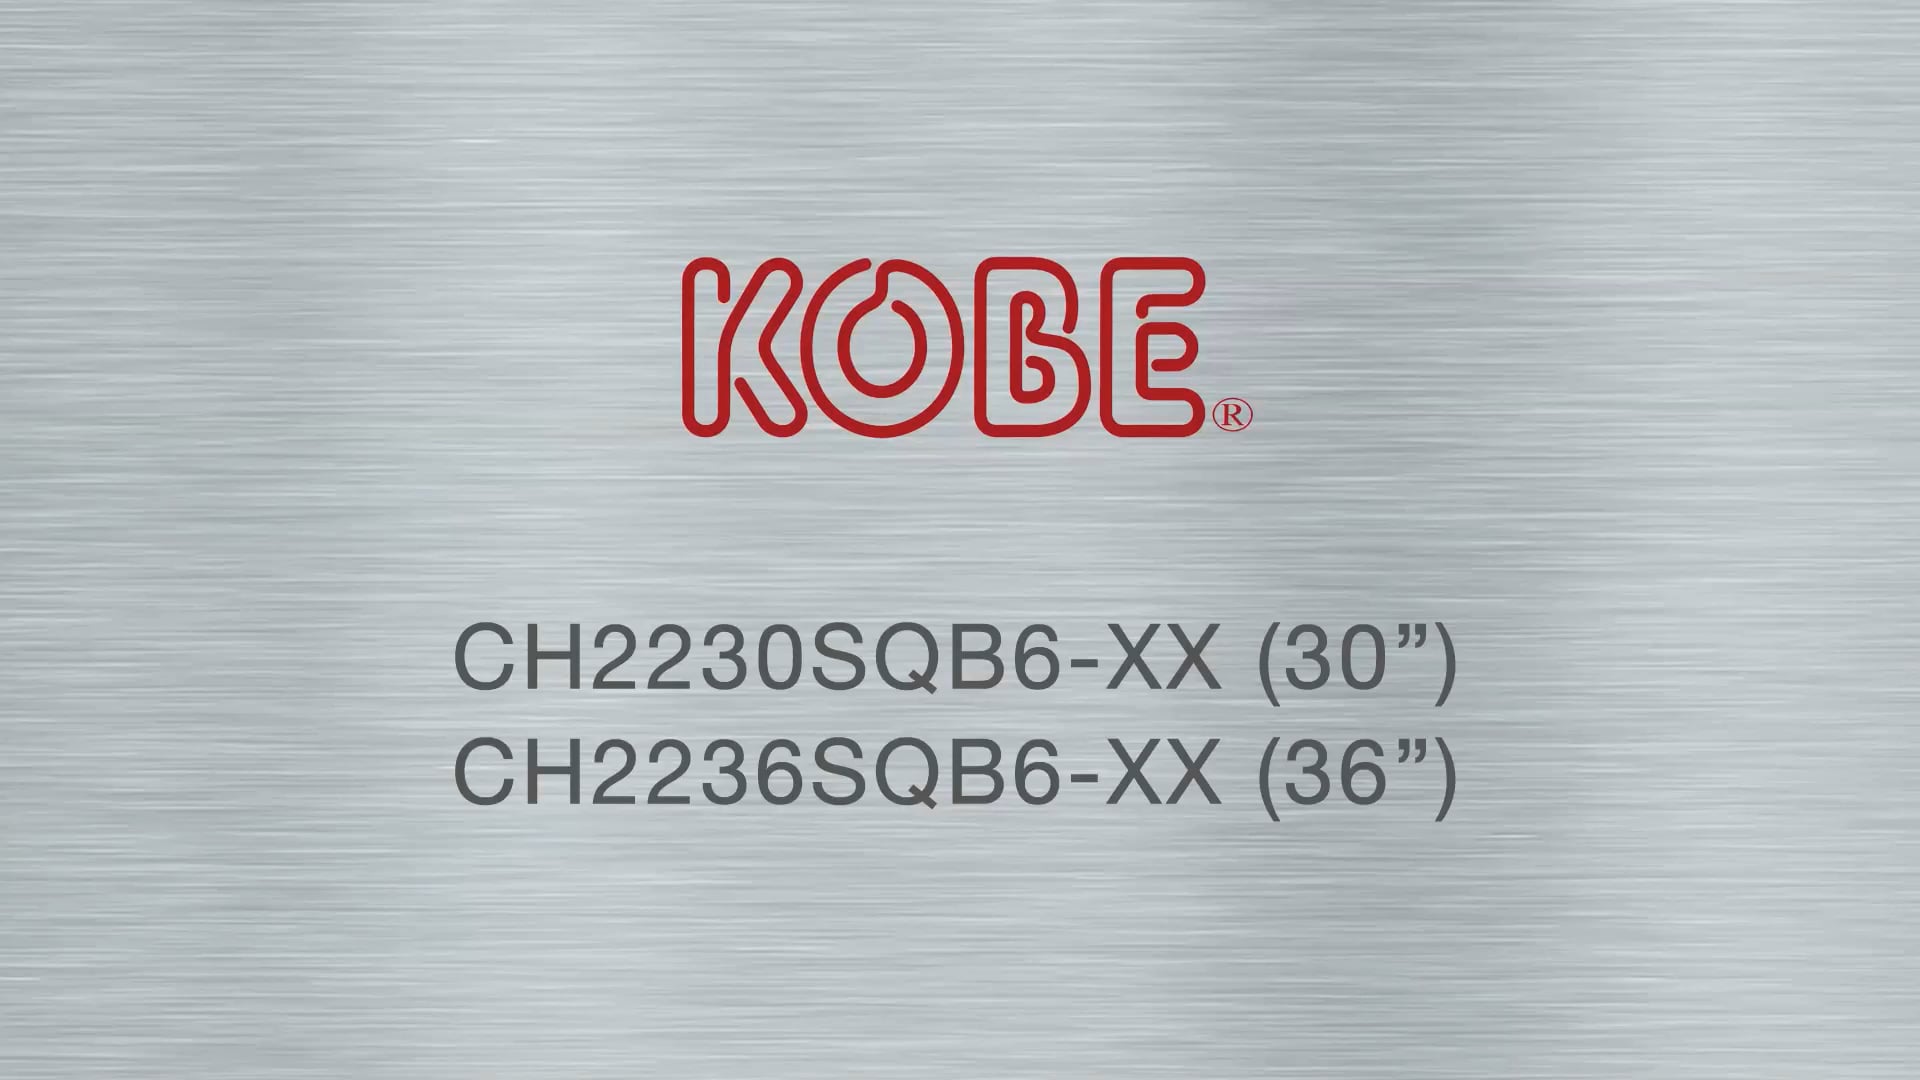 KOBE 680 CFM Hands-Free Fully Auto Under Cabinet Range Hood, 30"